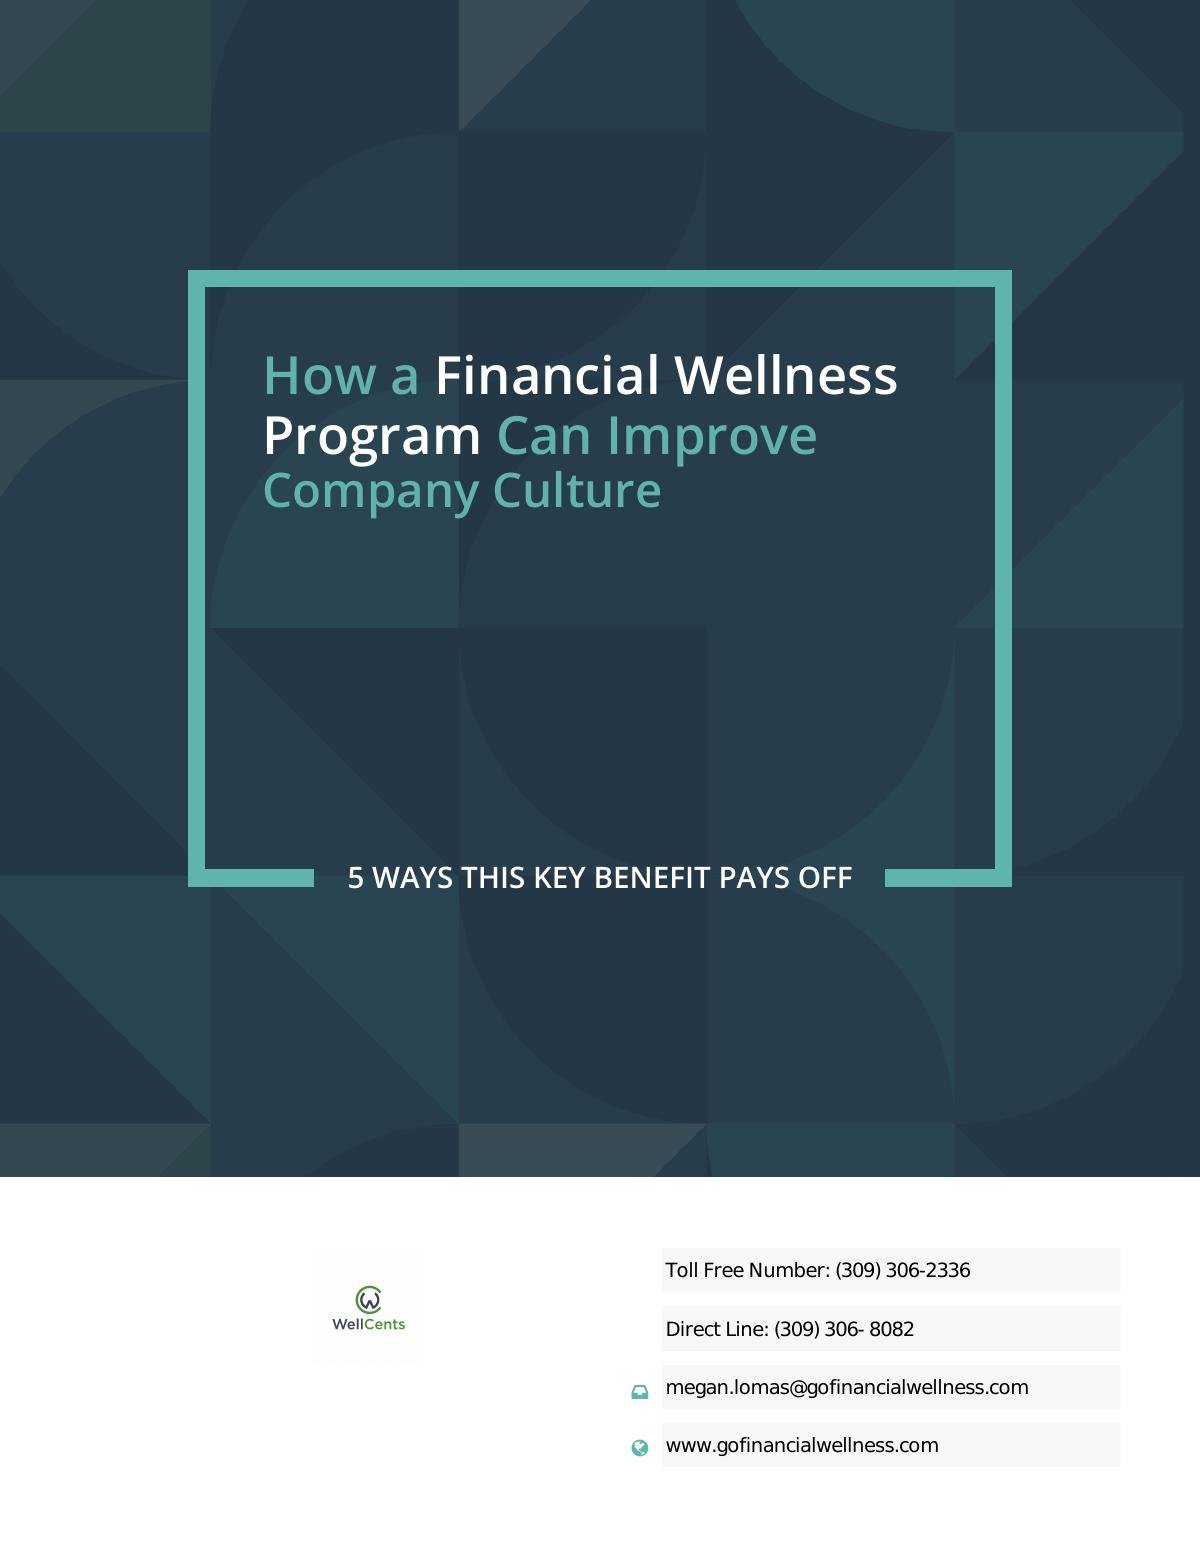 How a Financial Wellness Program Can Improve Company Culture